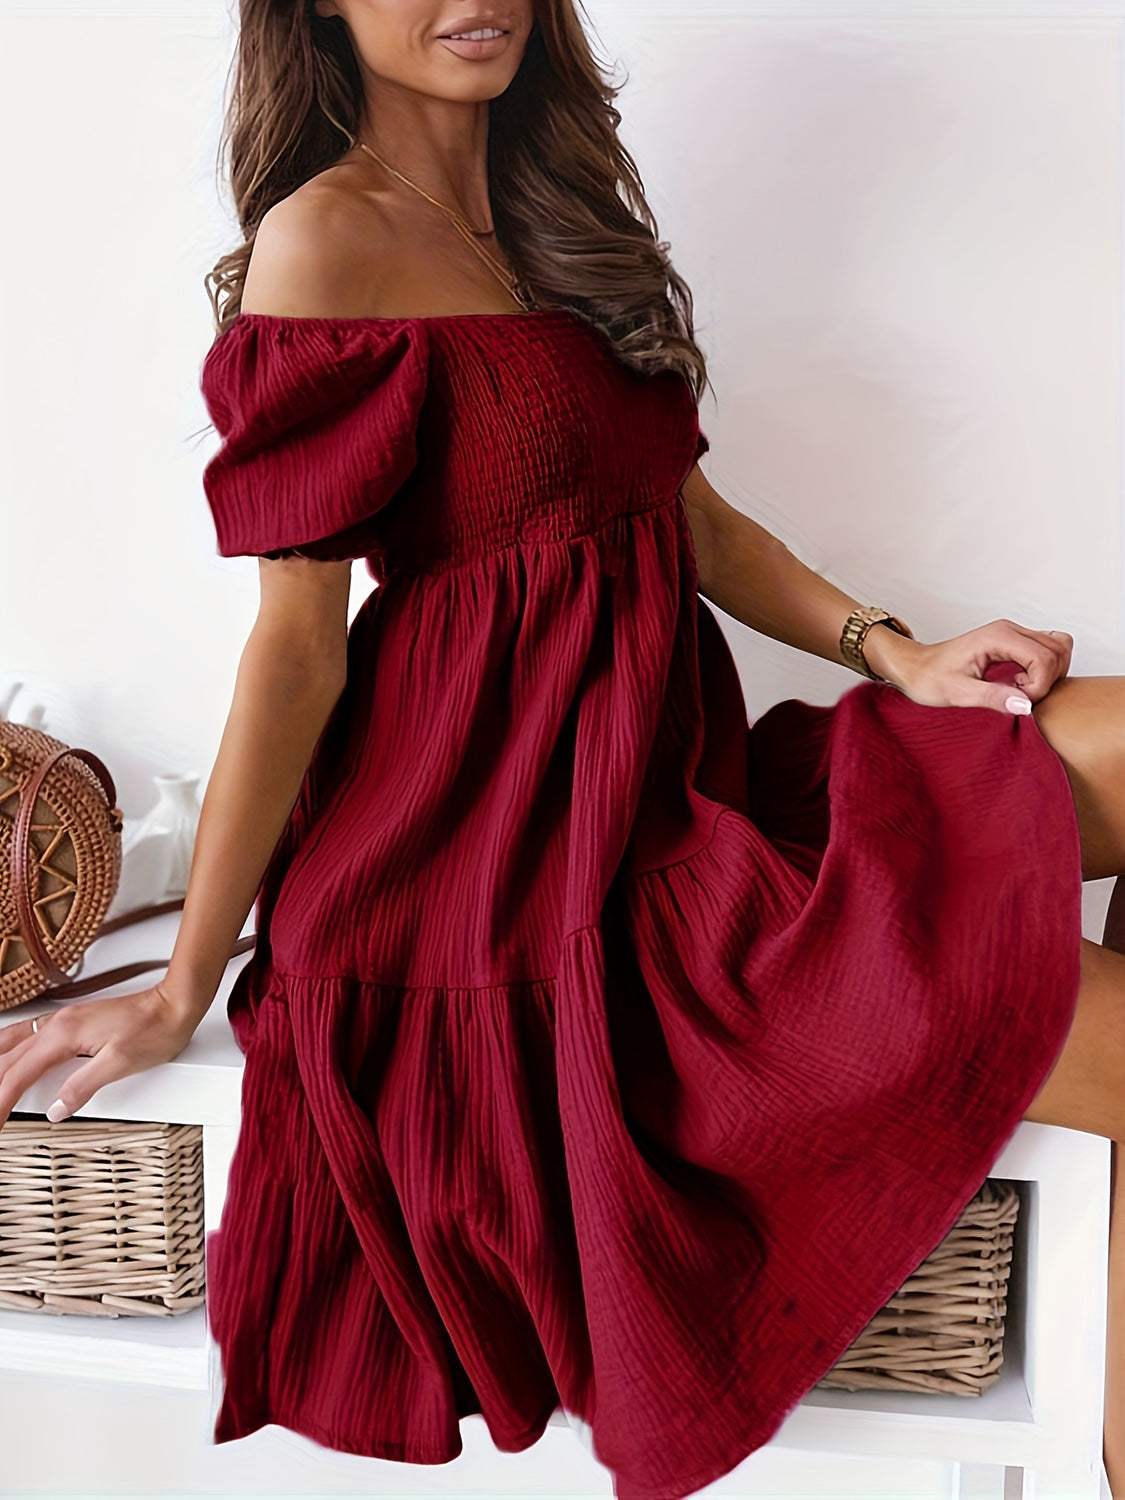 TEEK - Ruffled Off-Shoulder Short Sleeve Dress DRESS TEEK Trend Burgundy S 